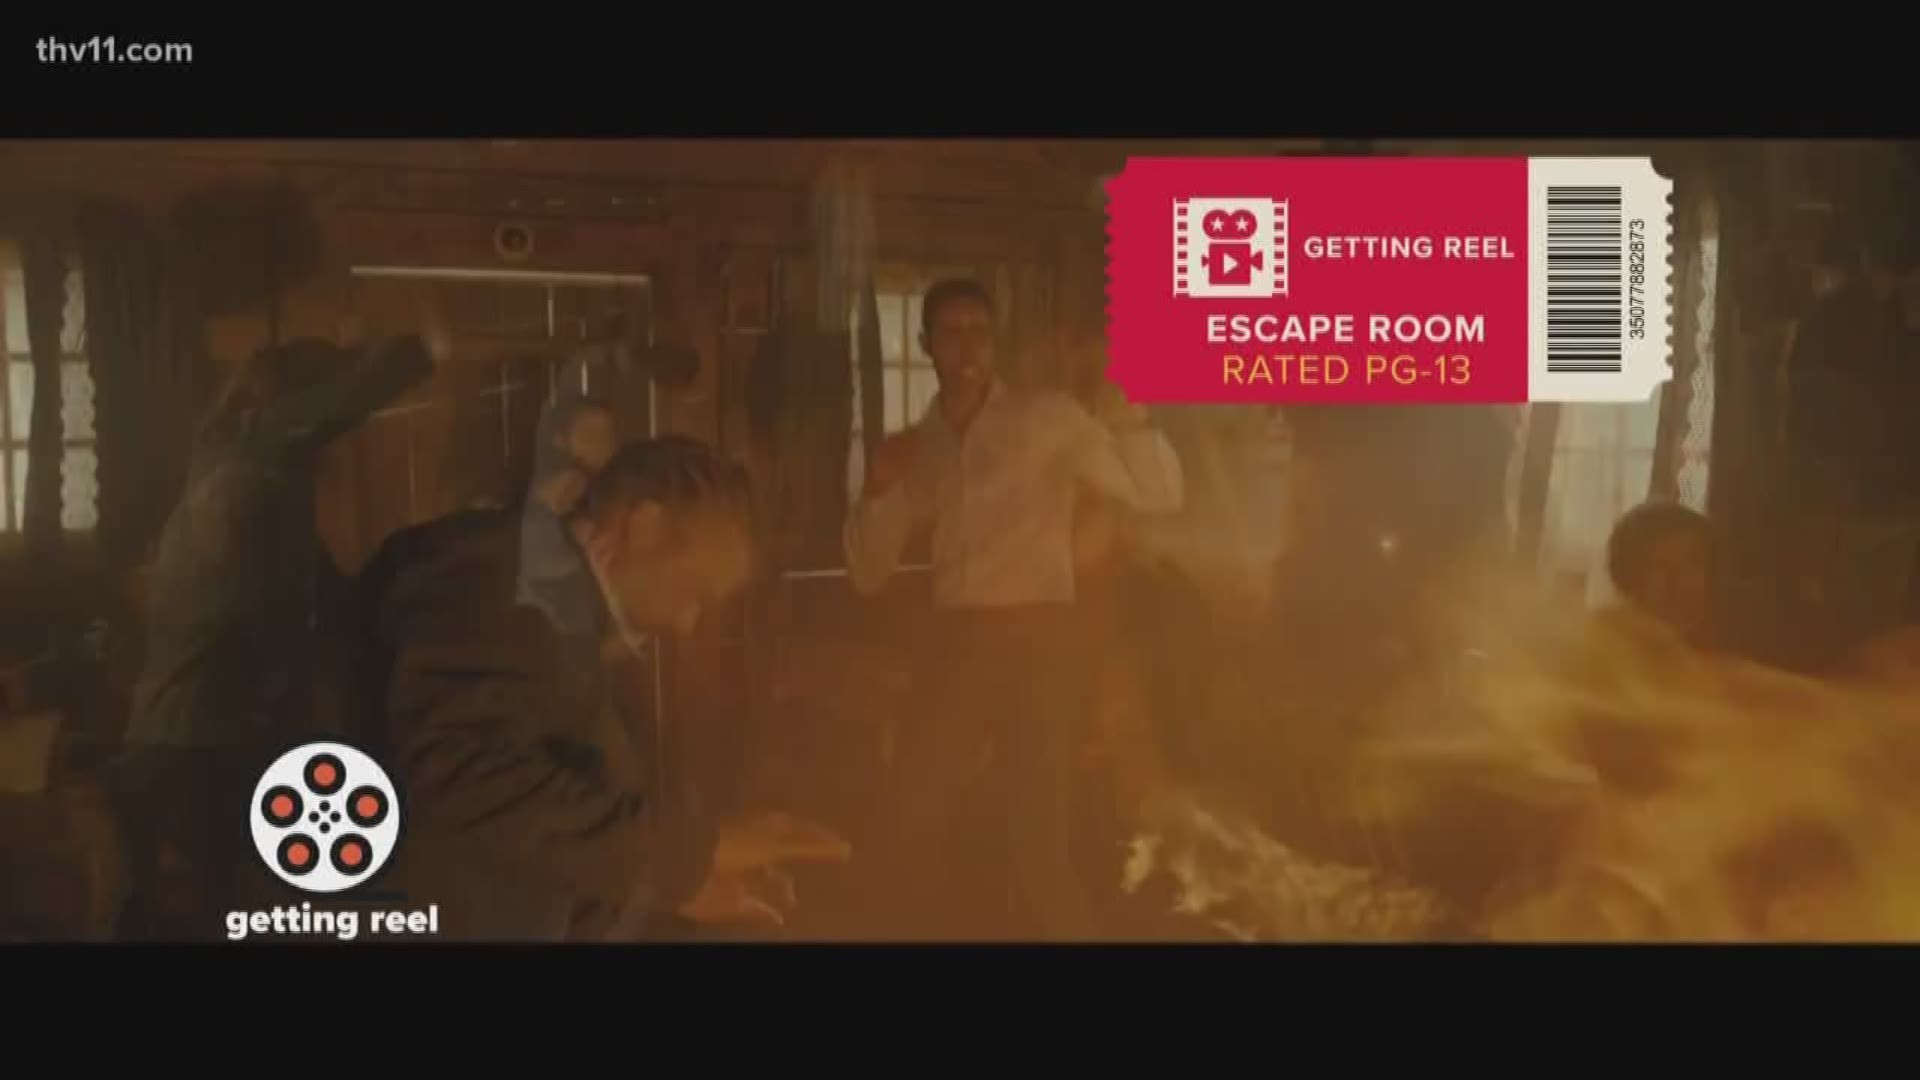 Escape Room fails at solving the horror movie puzzle